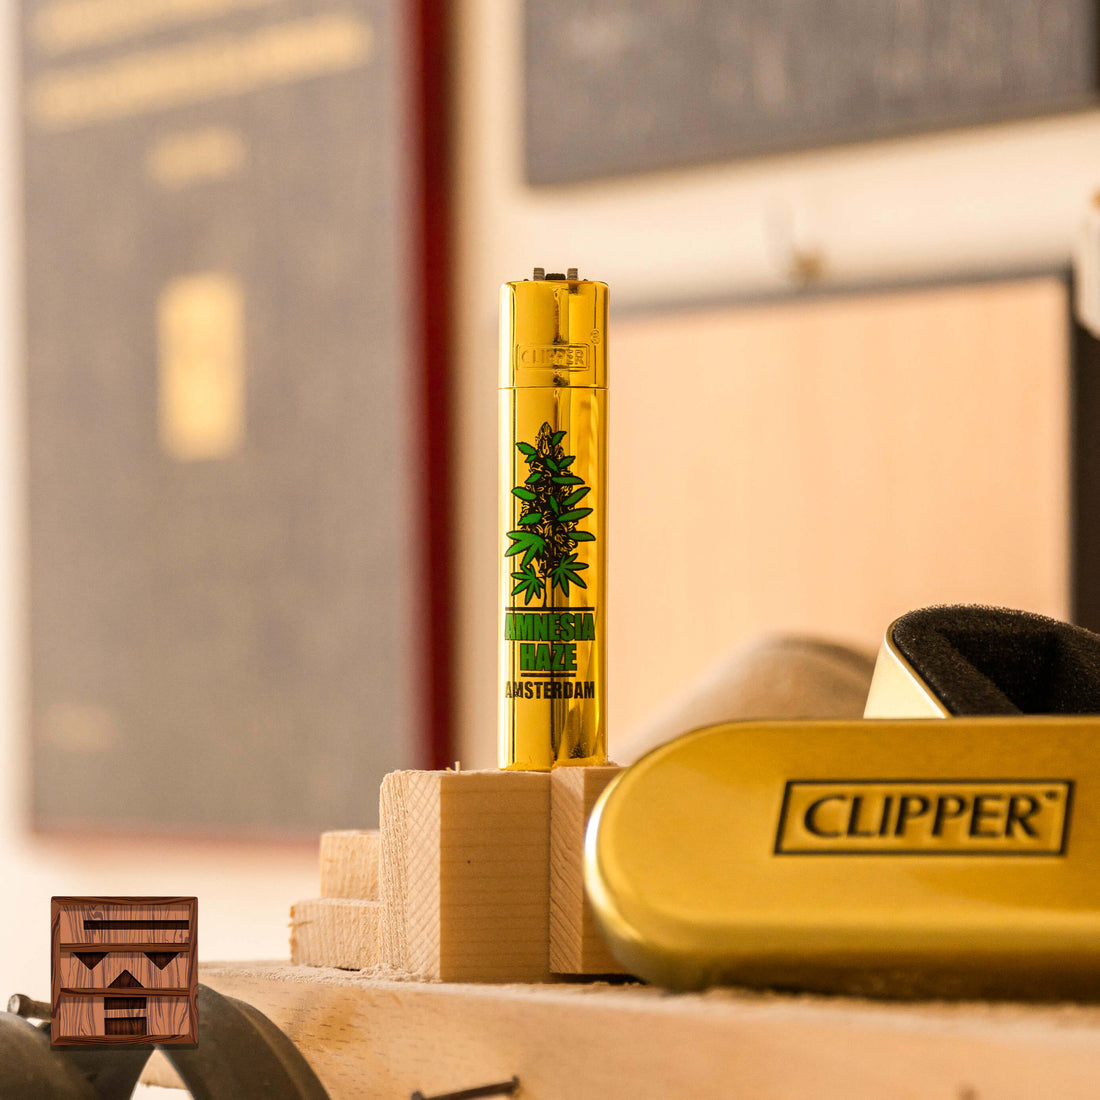 Clipper métal avec étui - Gold Amnesia Clipper clipper-collection-gold-a :  Smoke Express : boutique articles fumeurs, chichas